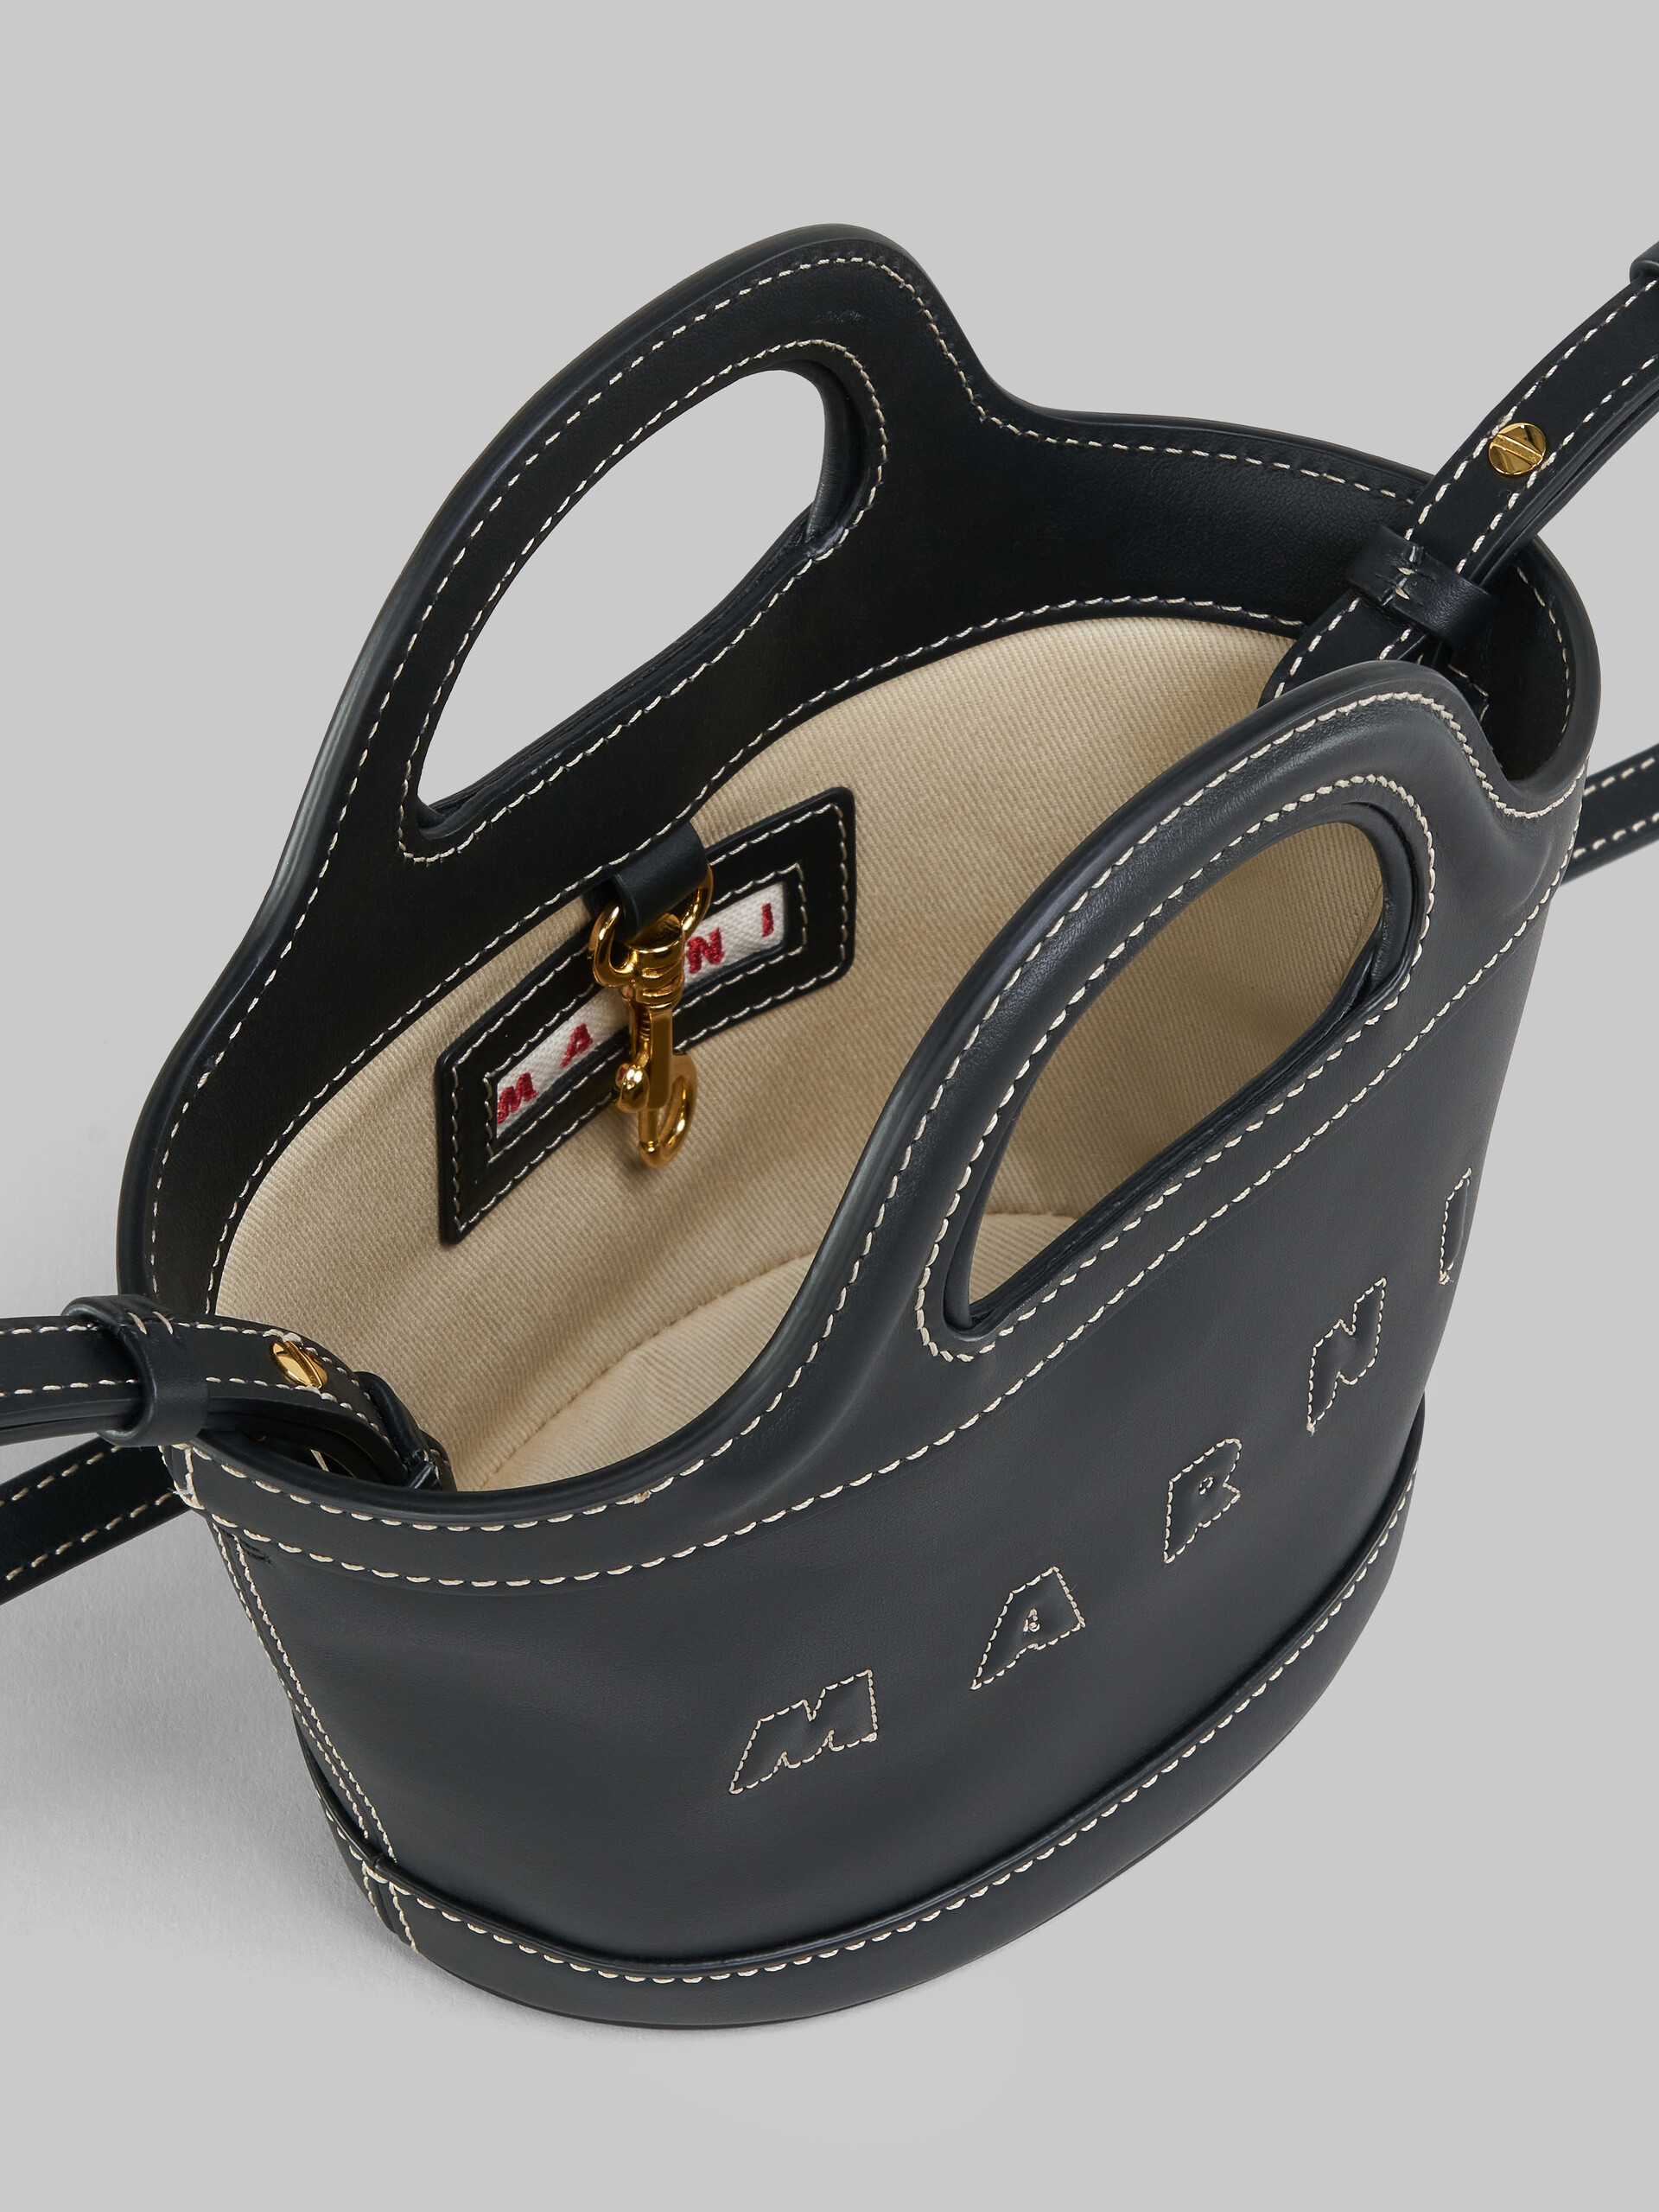 Tropicalia Micro Bag in brown leather - Handbags - Image 4